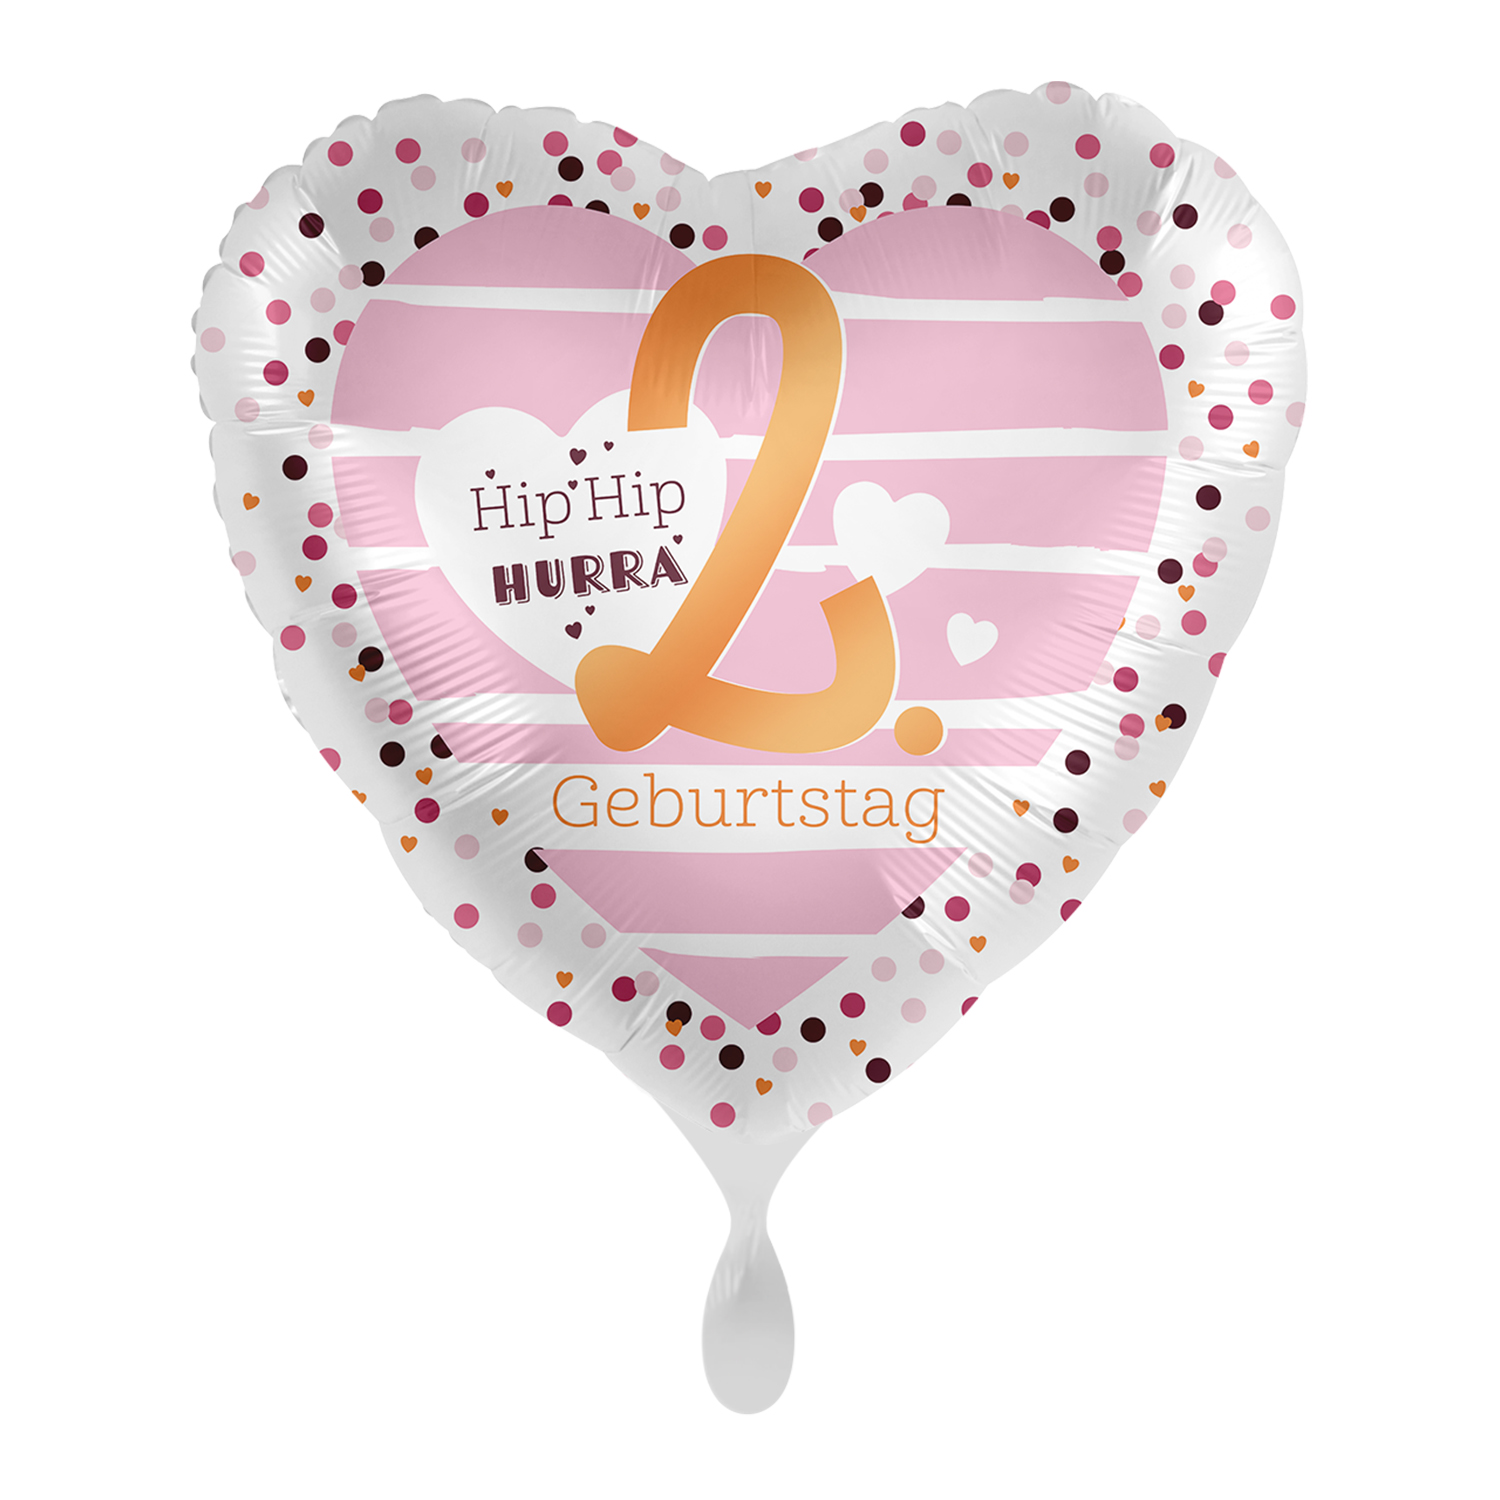 NEU Folienballon Pink Hearts - Hip Hip Hurra 2. Geburtstag - ca. 45cm Durchmesser